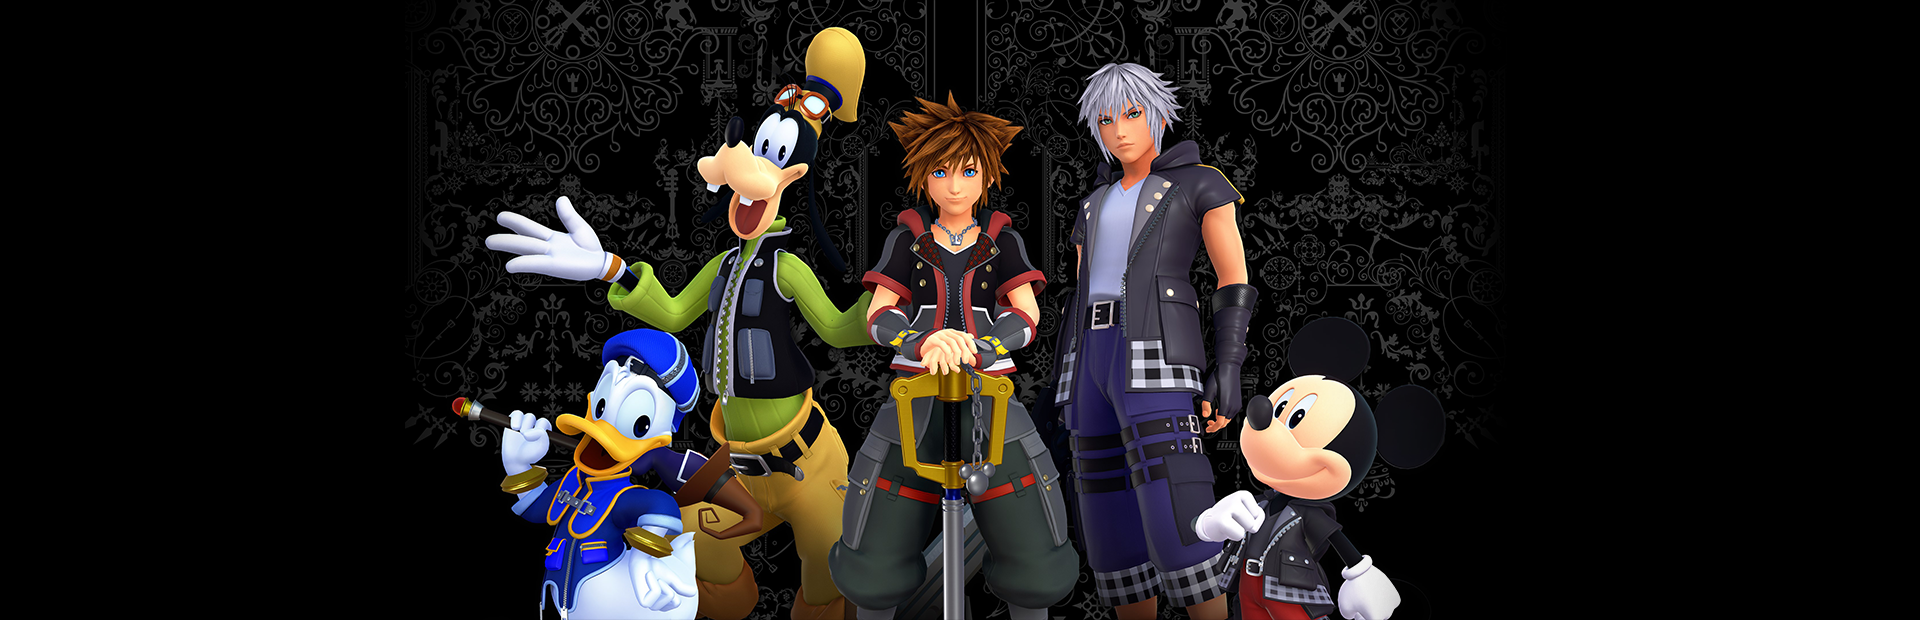 Flash trace. Square Enix Kingdom Hearts. Kingdom Hearts 3. Kingdom Hearts 4. Kingdom Hearts 2.